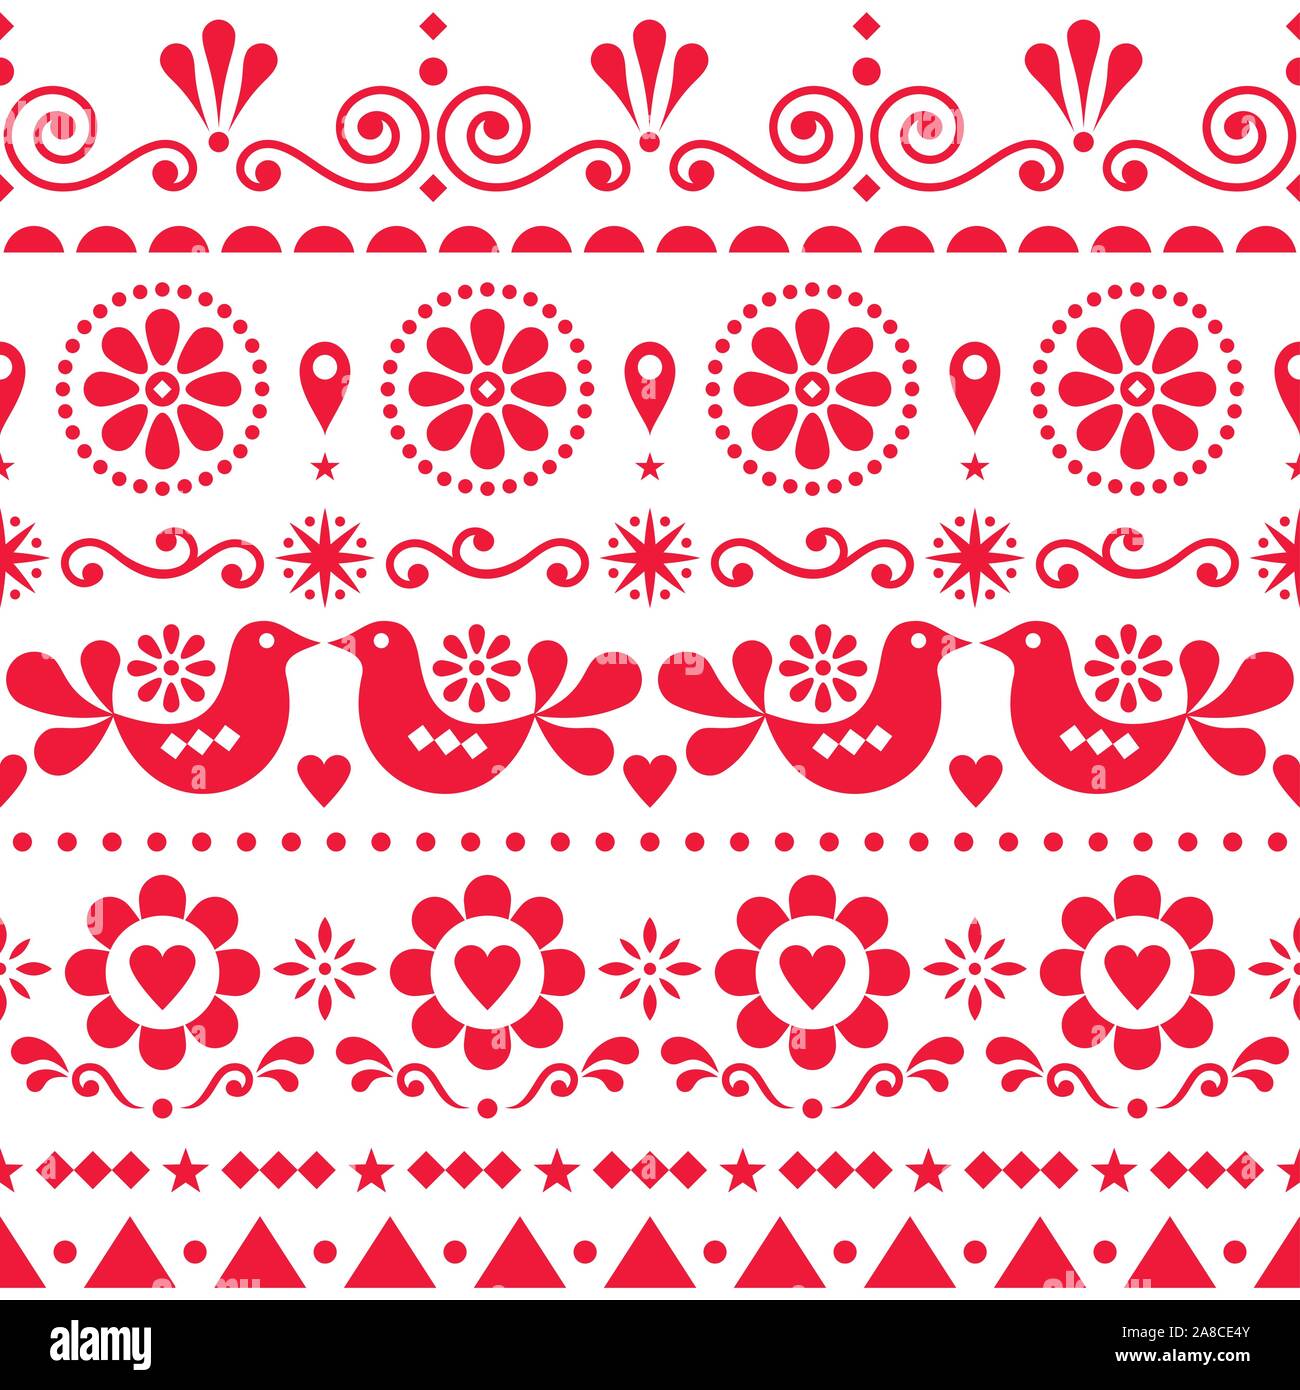 Seamless Scandinavian olk art vector pattern, cute repetitive design with birds and flowers Stock Vector